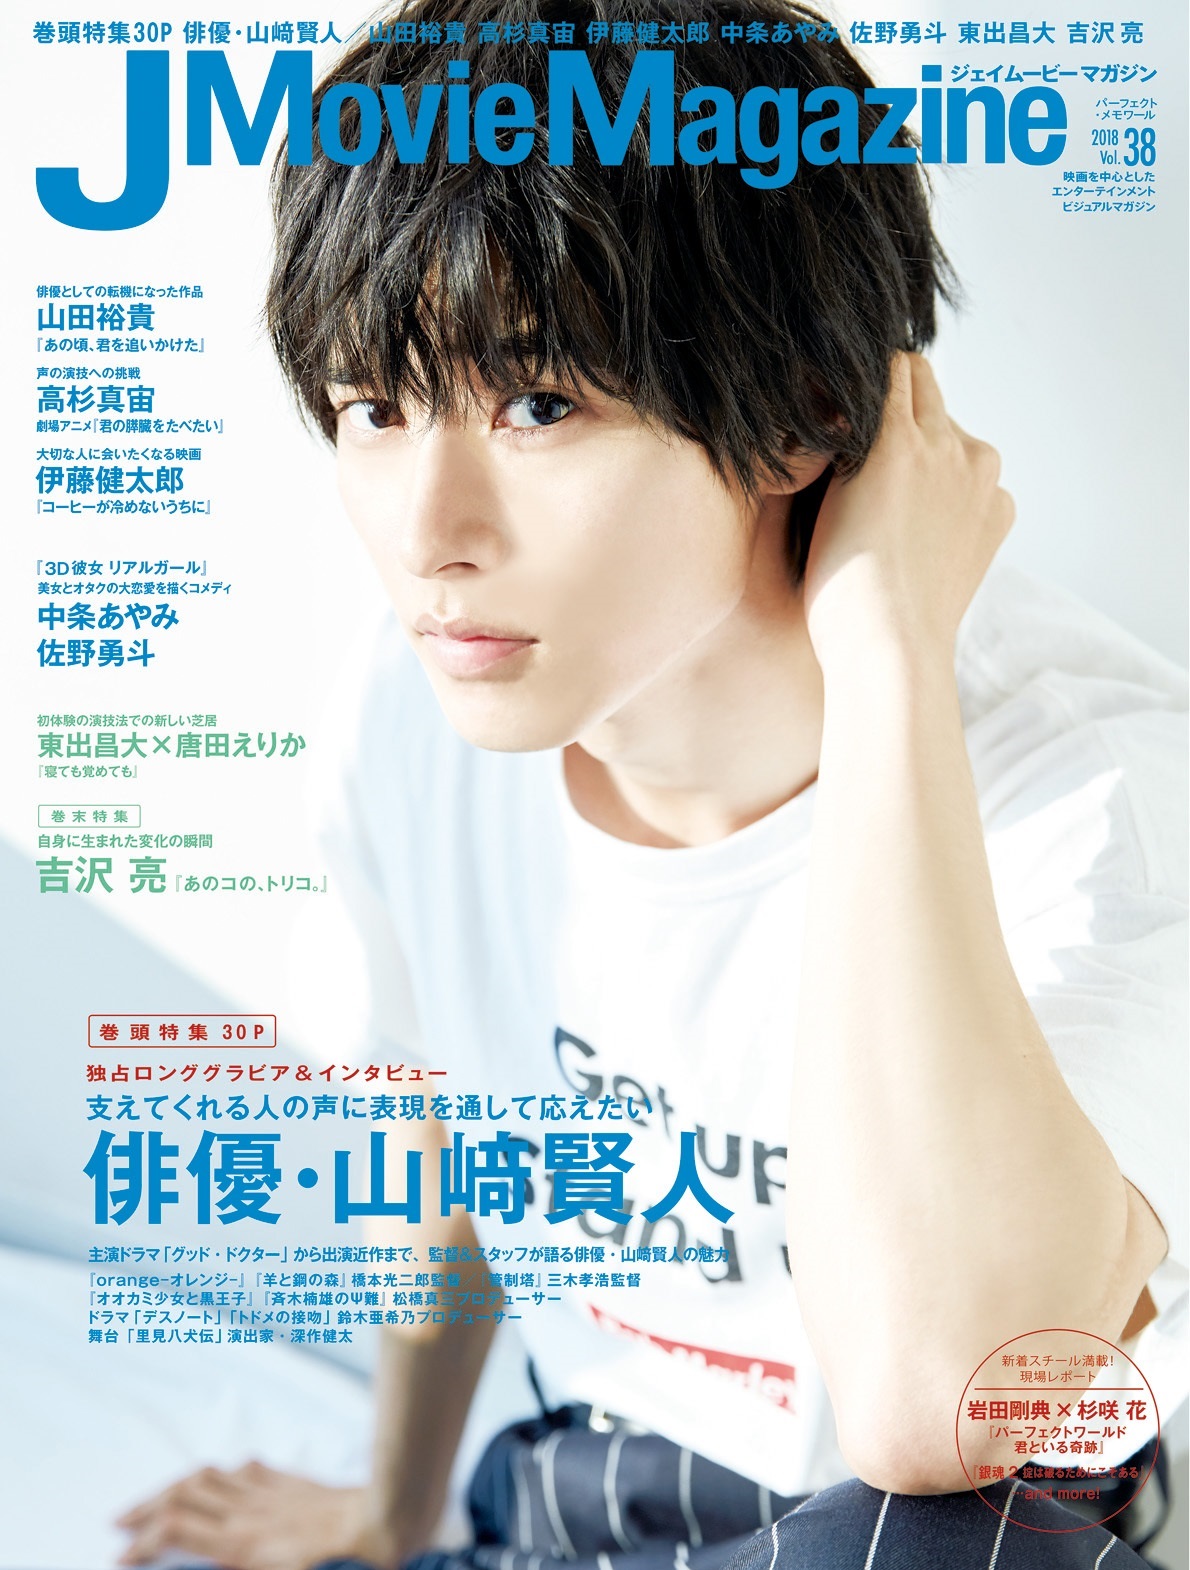 J Movie Magazine ジェイムービーマガジン Vol 38 8月8日発売 株式会社リイド社のプレスリリース